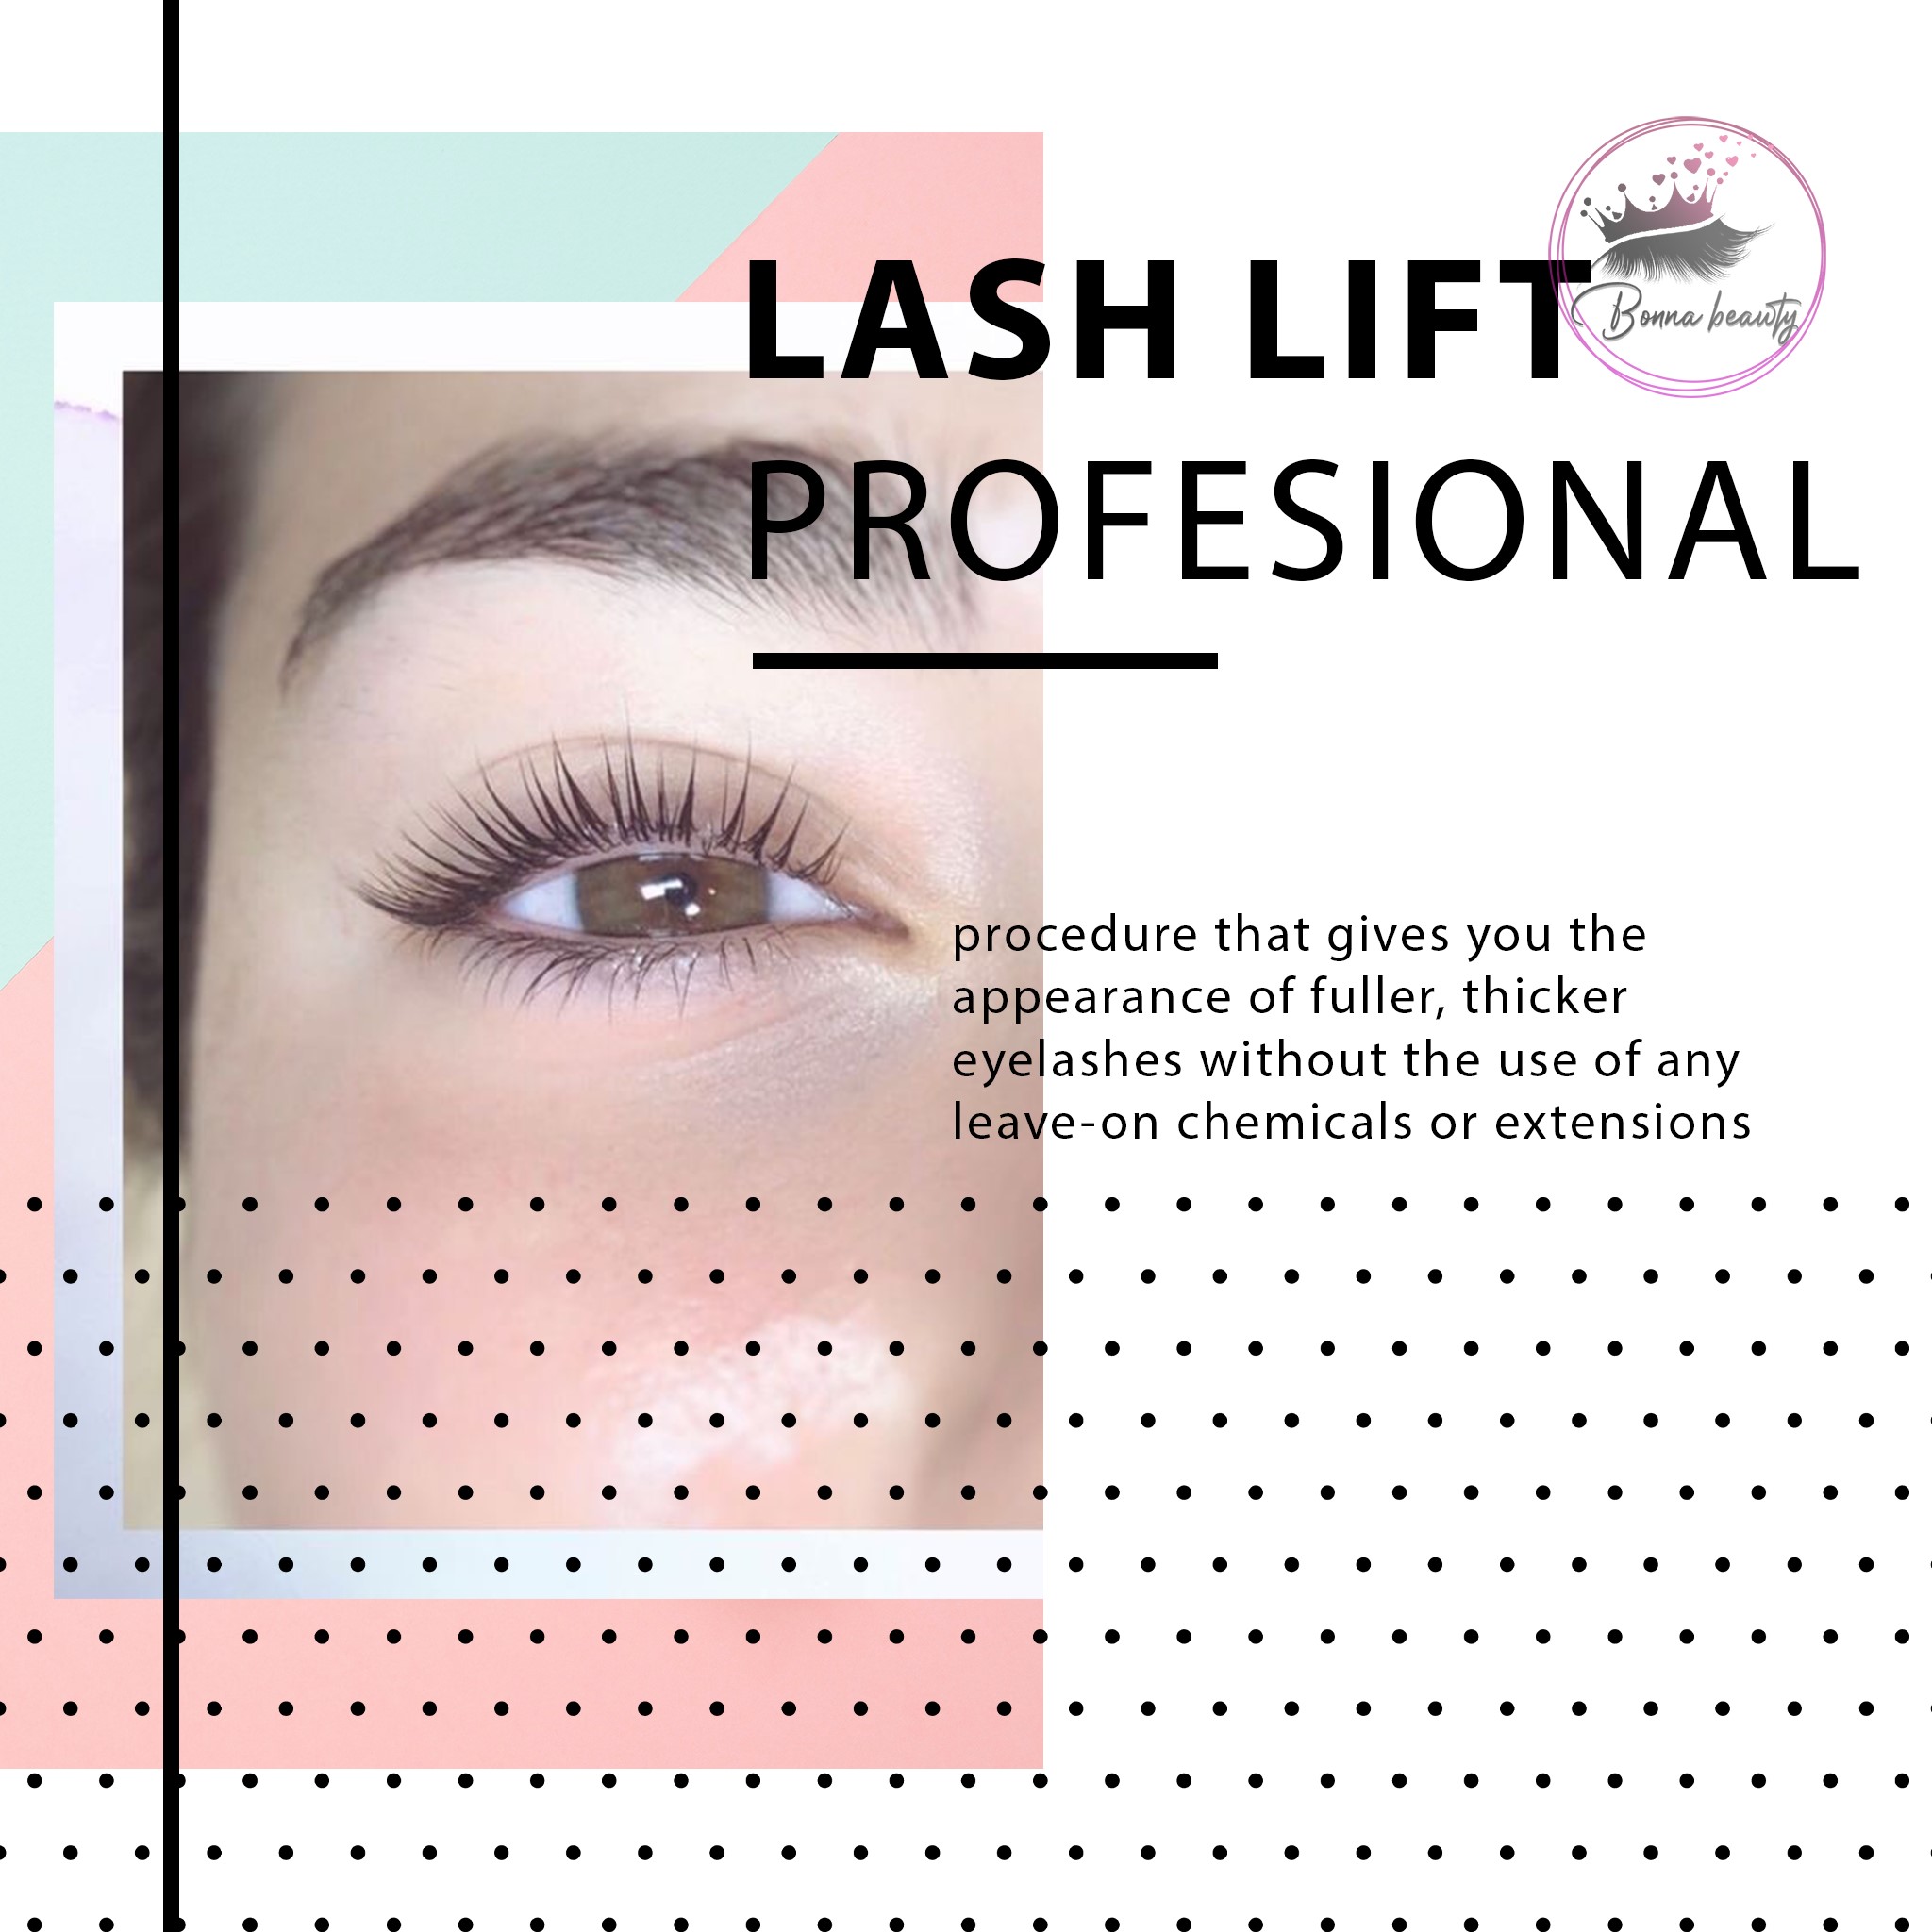 1 Academy Training | Eyelash extensions | Lash Lift